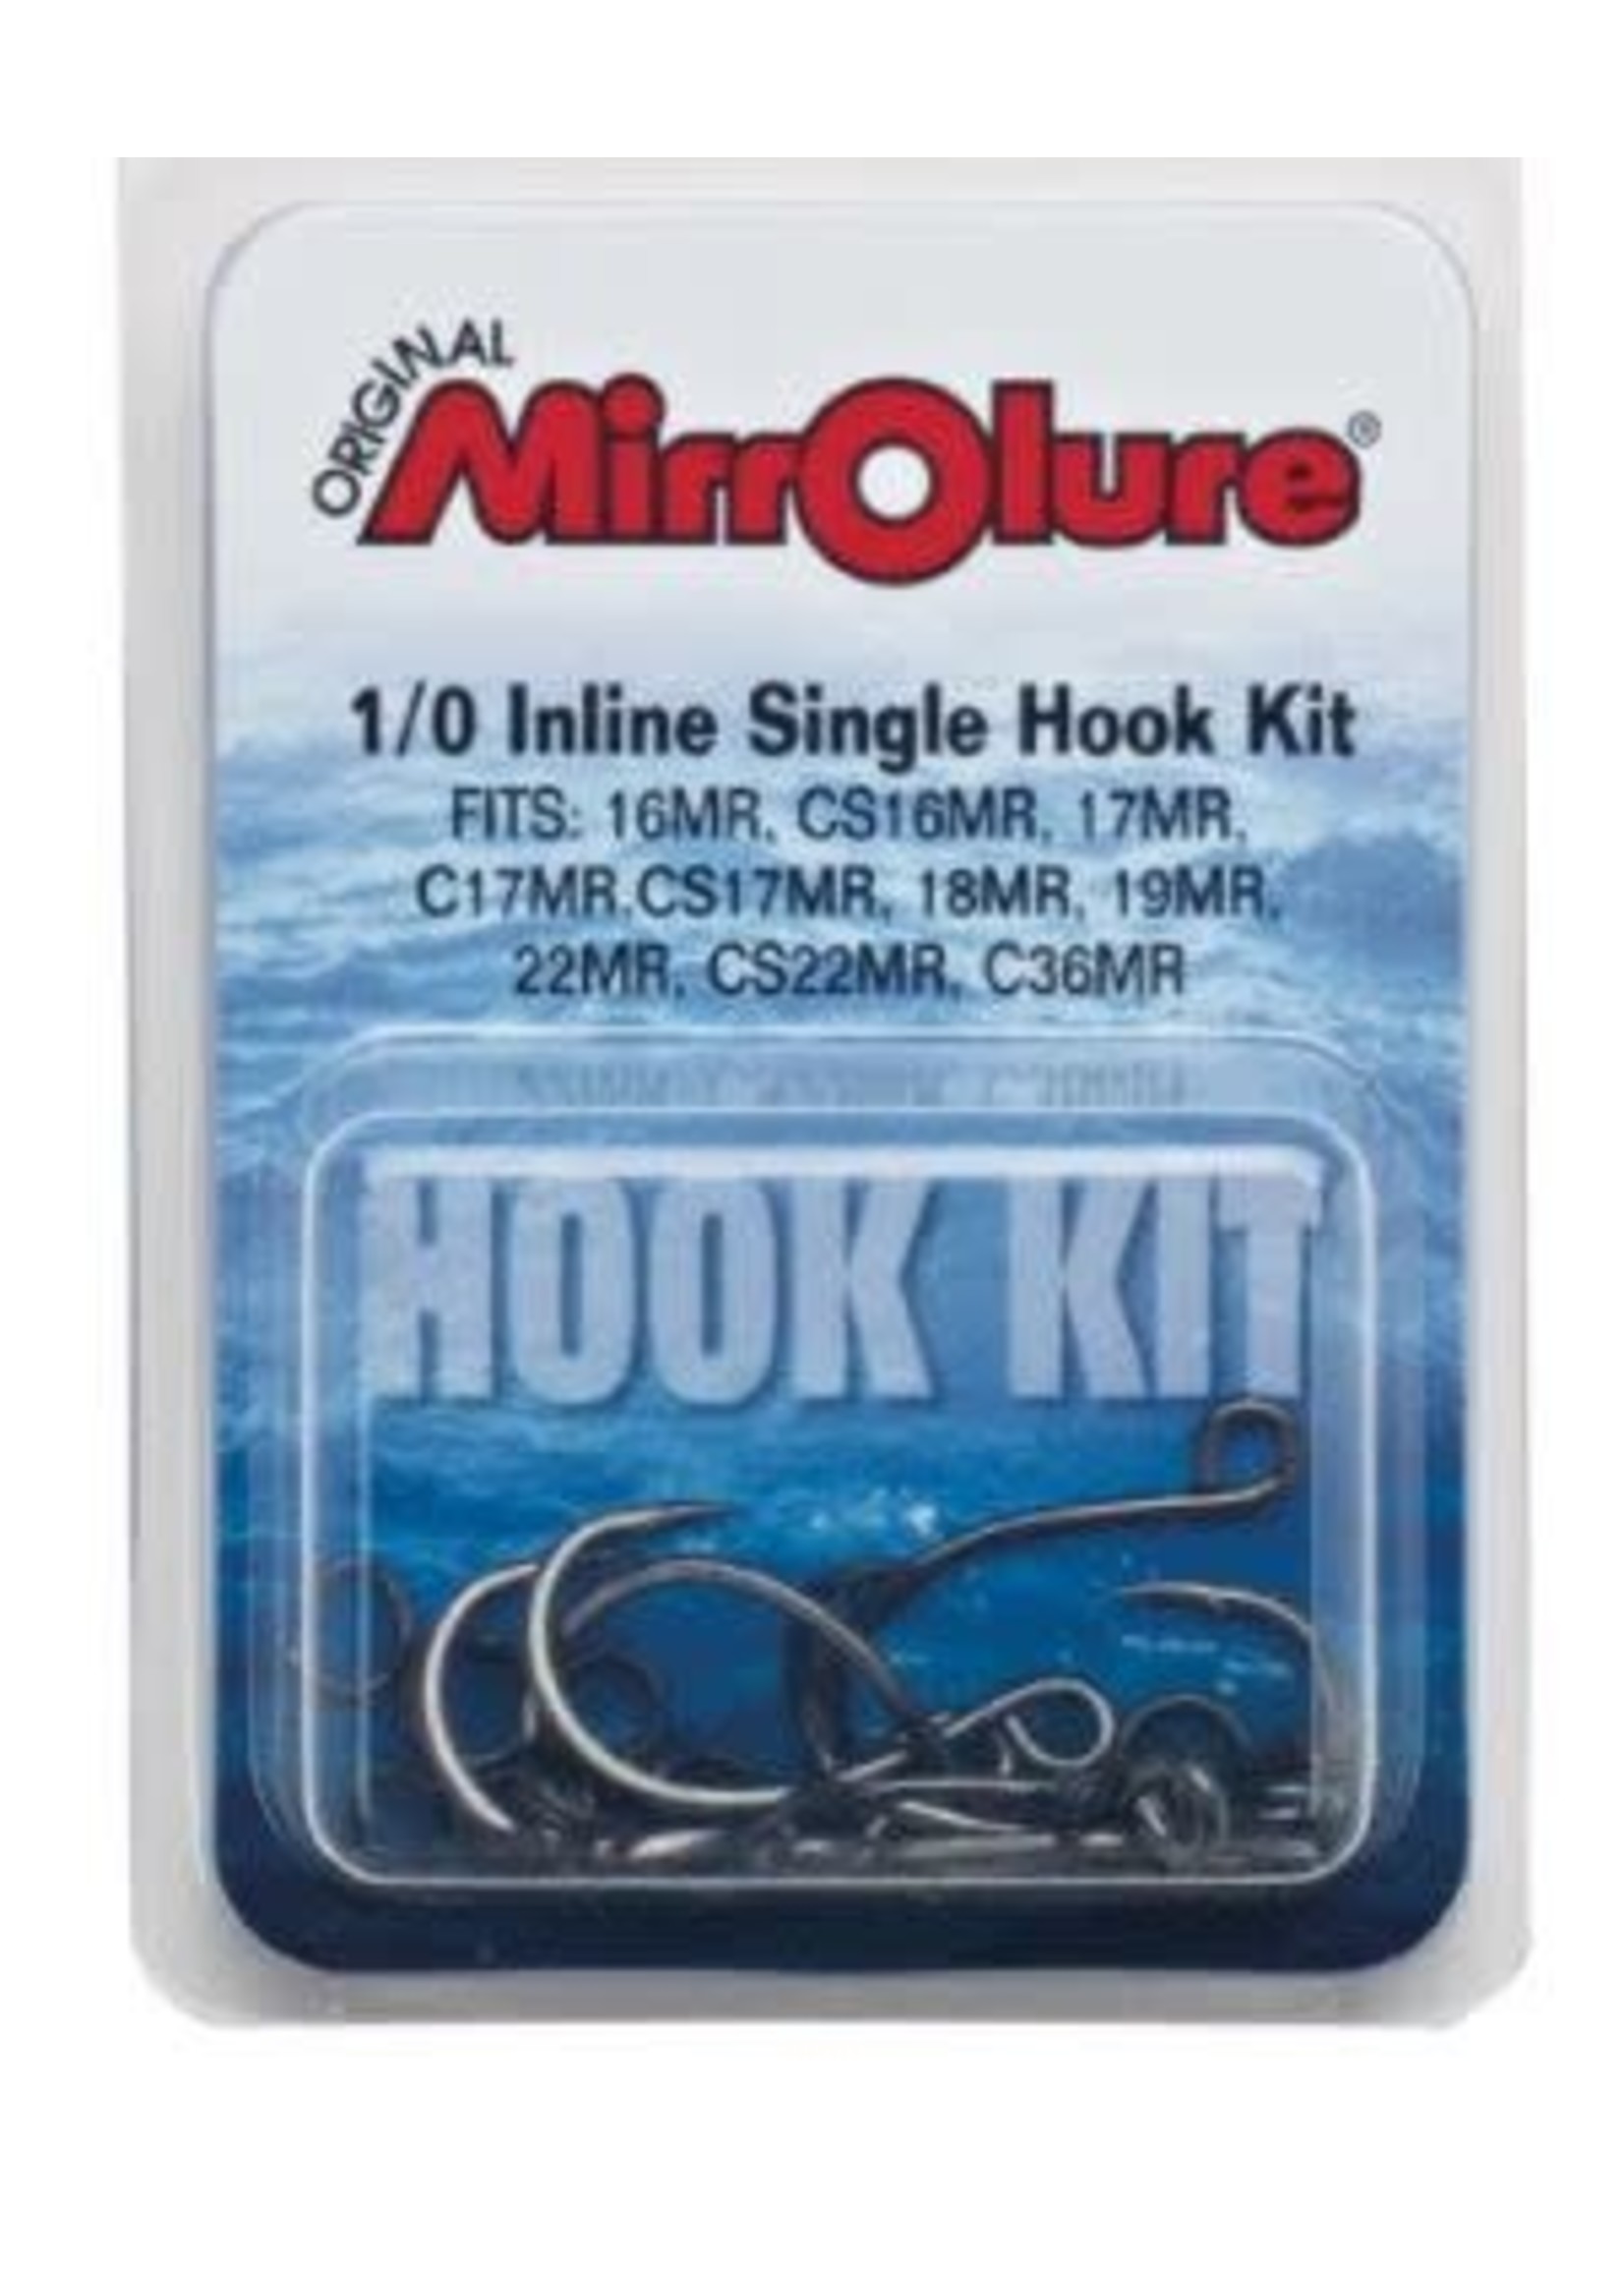 MirrOlure Inline Single Hook Kit 1/0